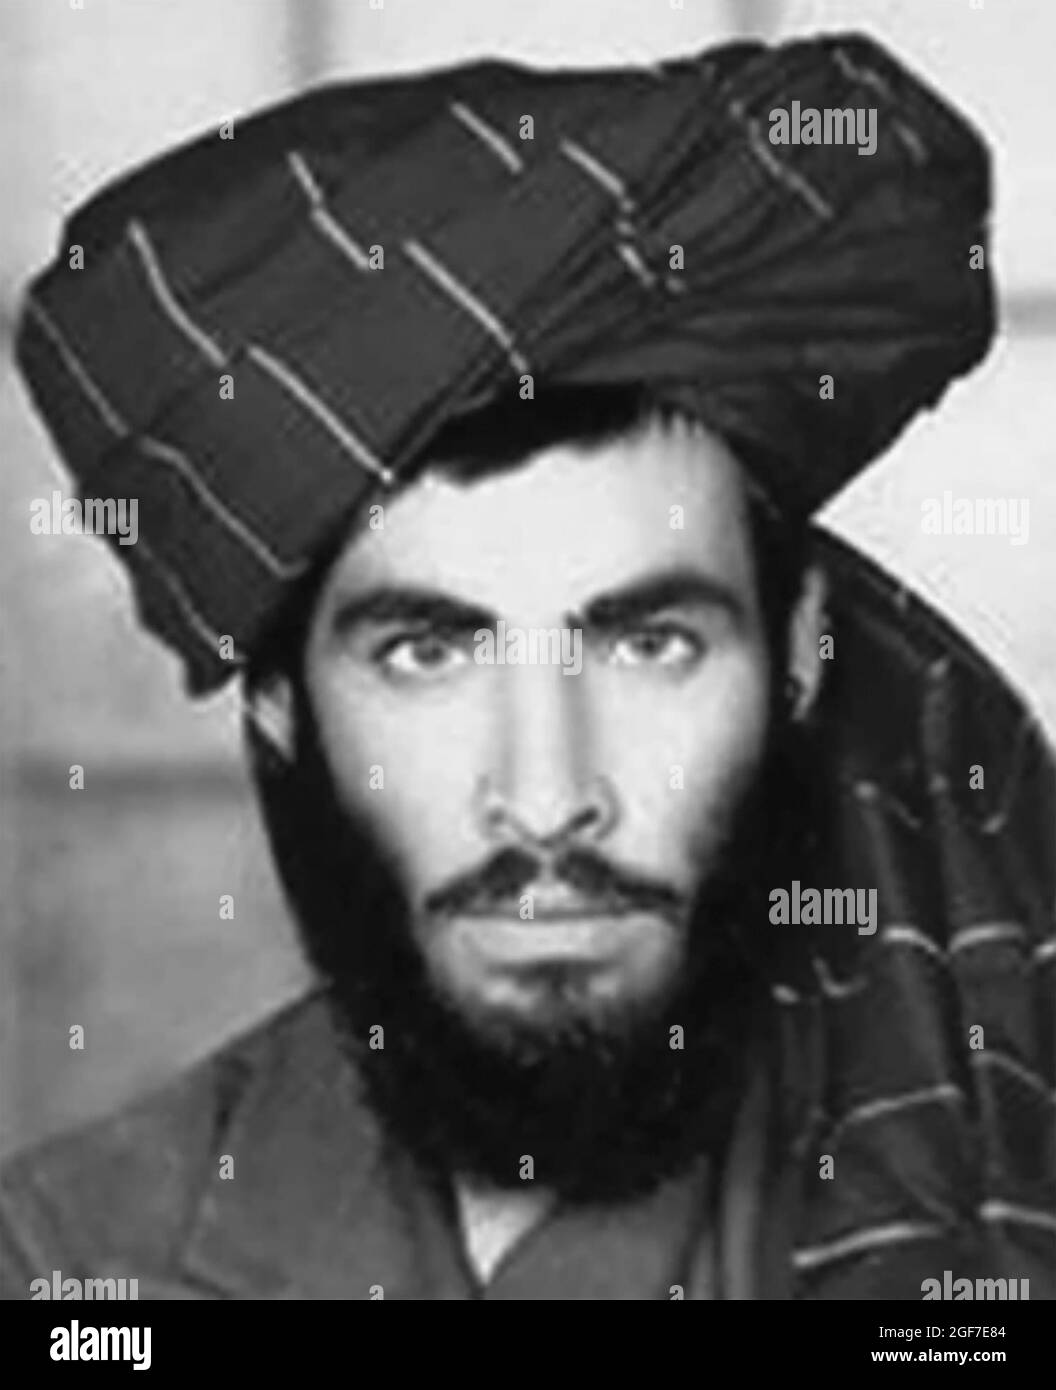 MOHAMMED OMAR (c 1960-2013) Afghan Mullah (clericale) e leader talebano morto di tubercolosi 23 aprile 2013 visto qui nel 1978. Foto Stock